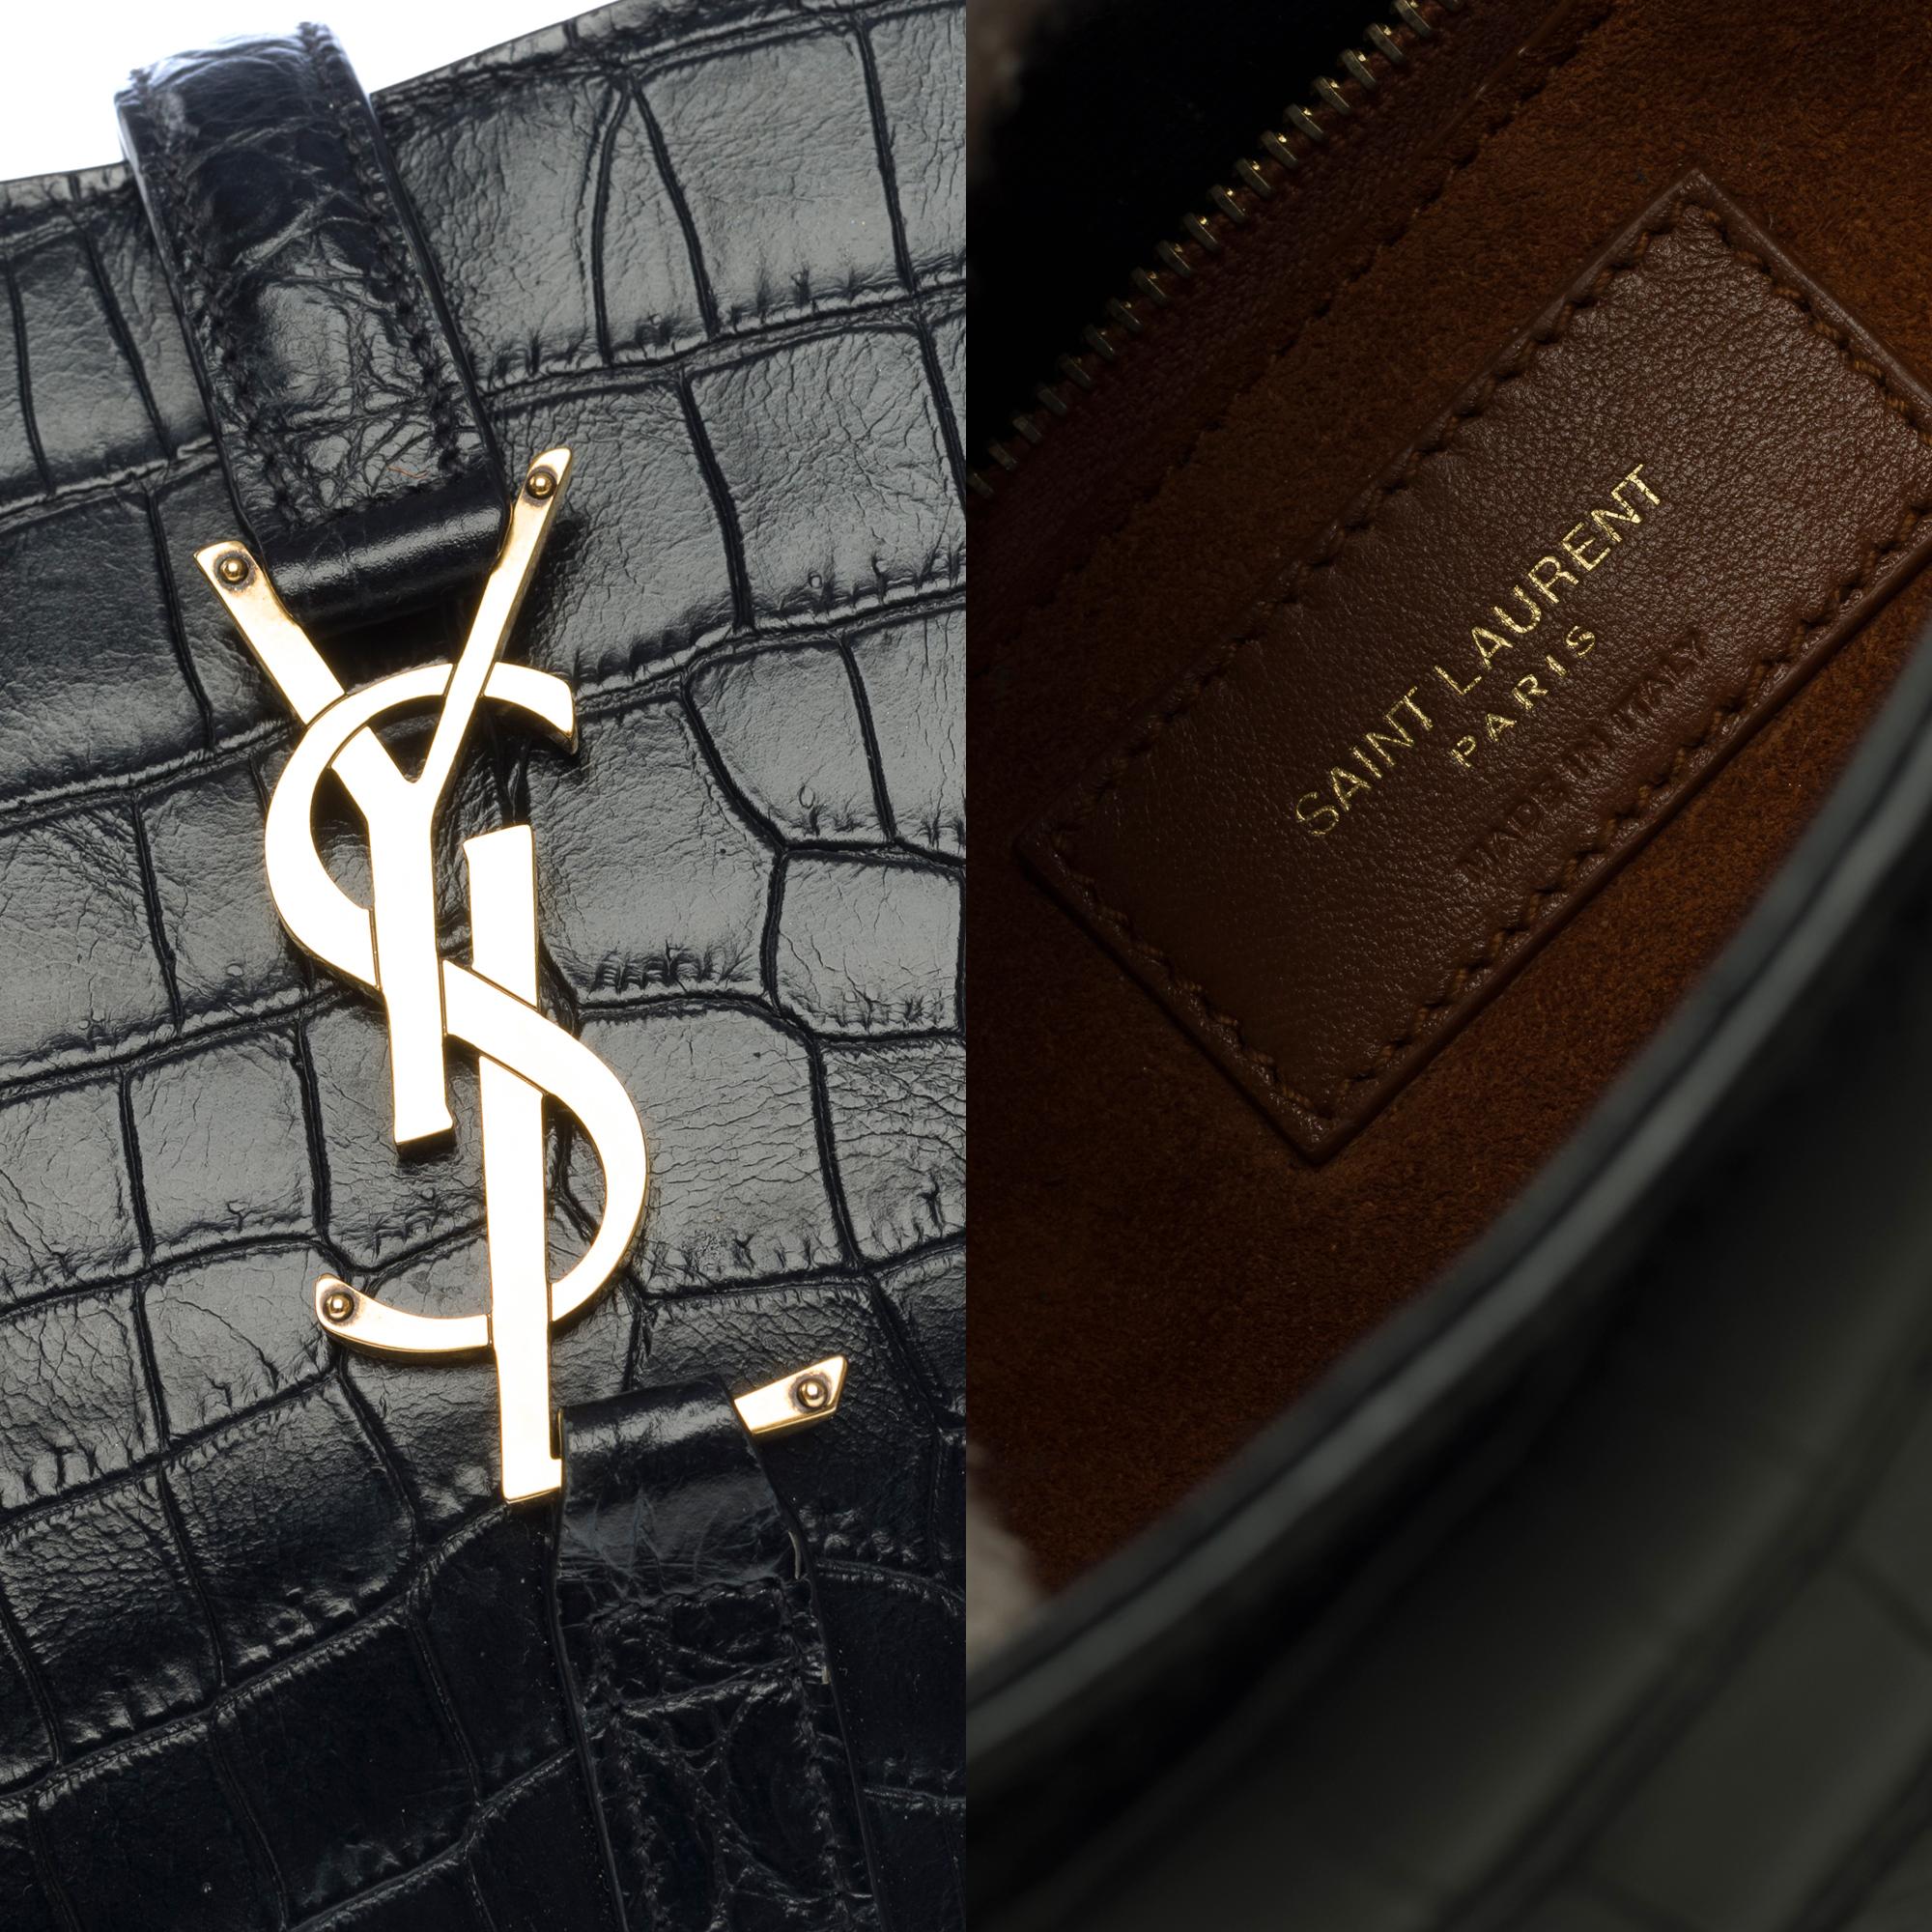 Yves Saint-Laurent 5 à 7 hobo bag in black calf leather, GHW 3